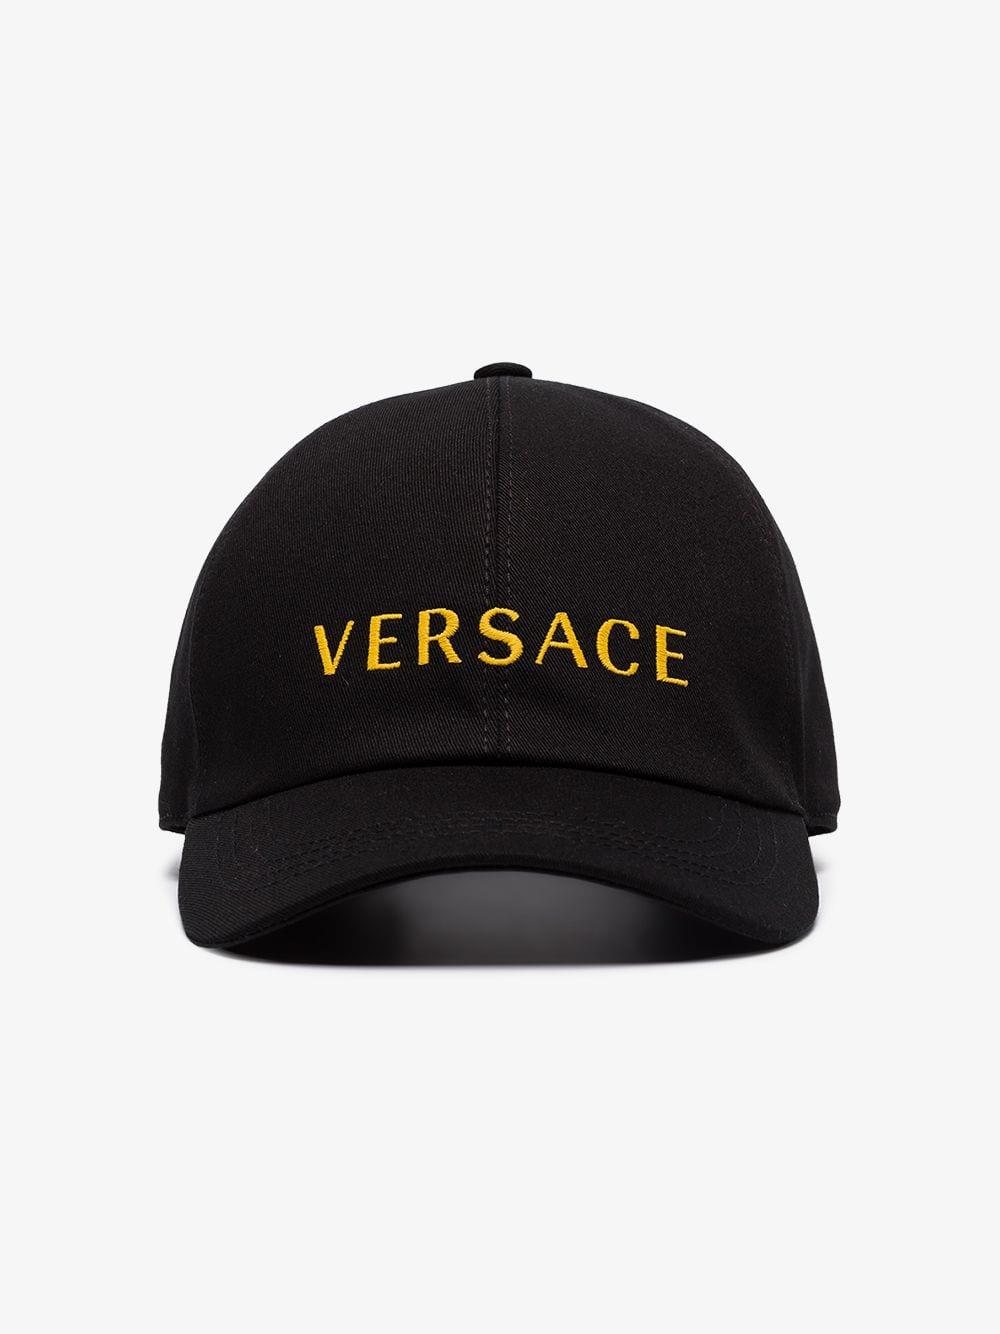 versace hat gold